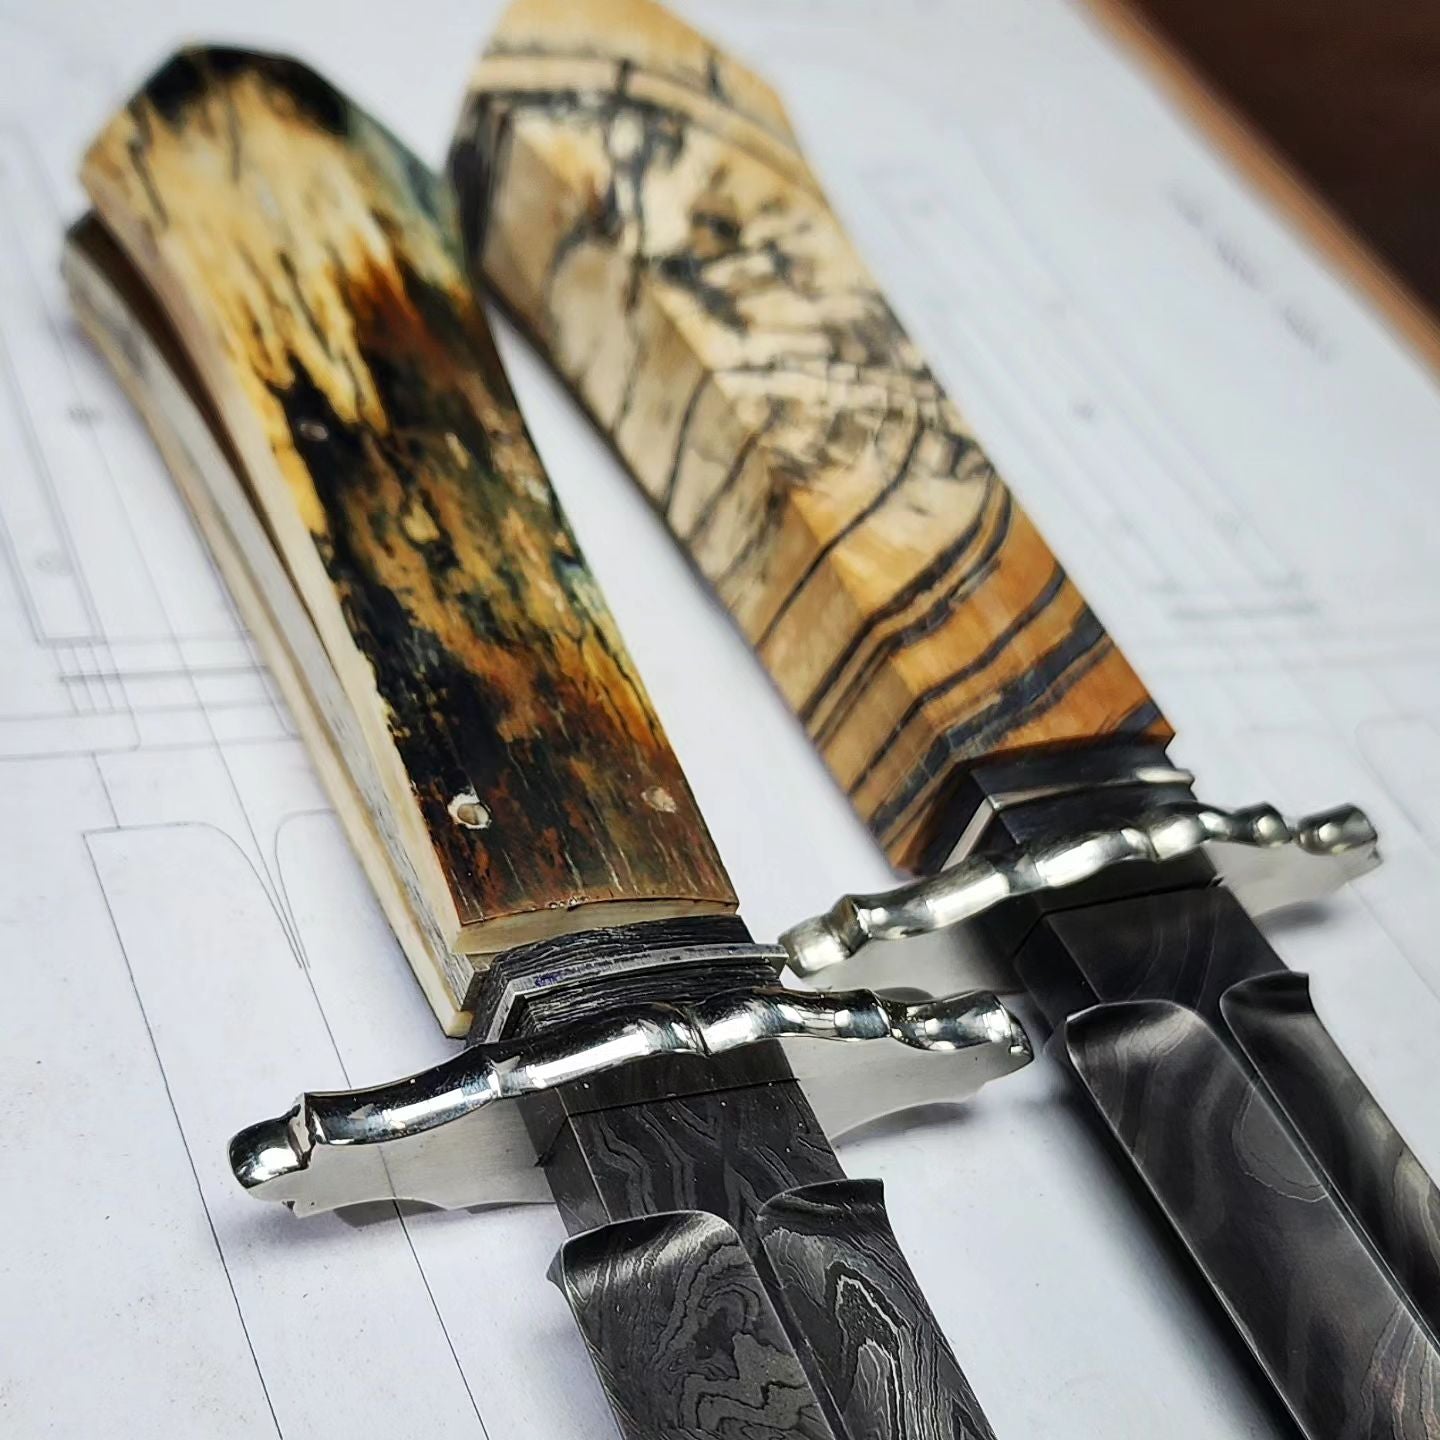 Coffin Handle Dagger Design